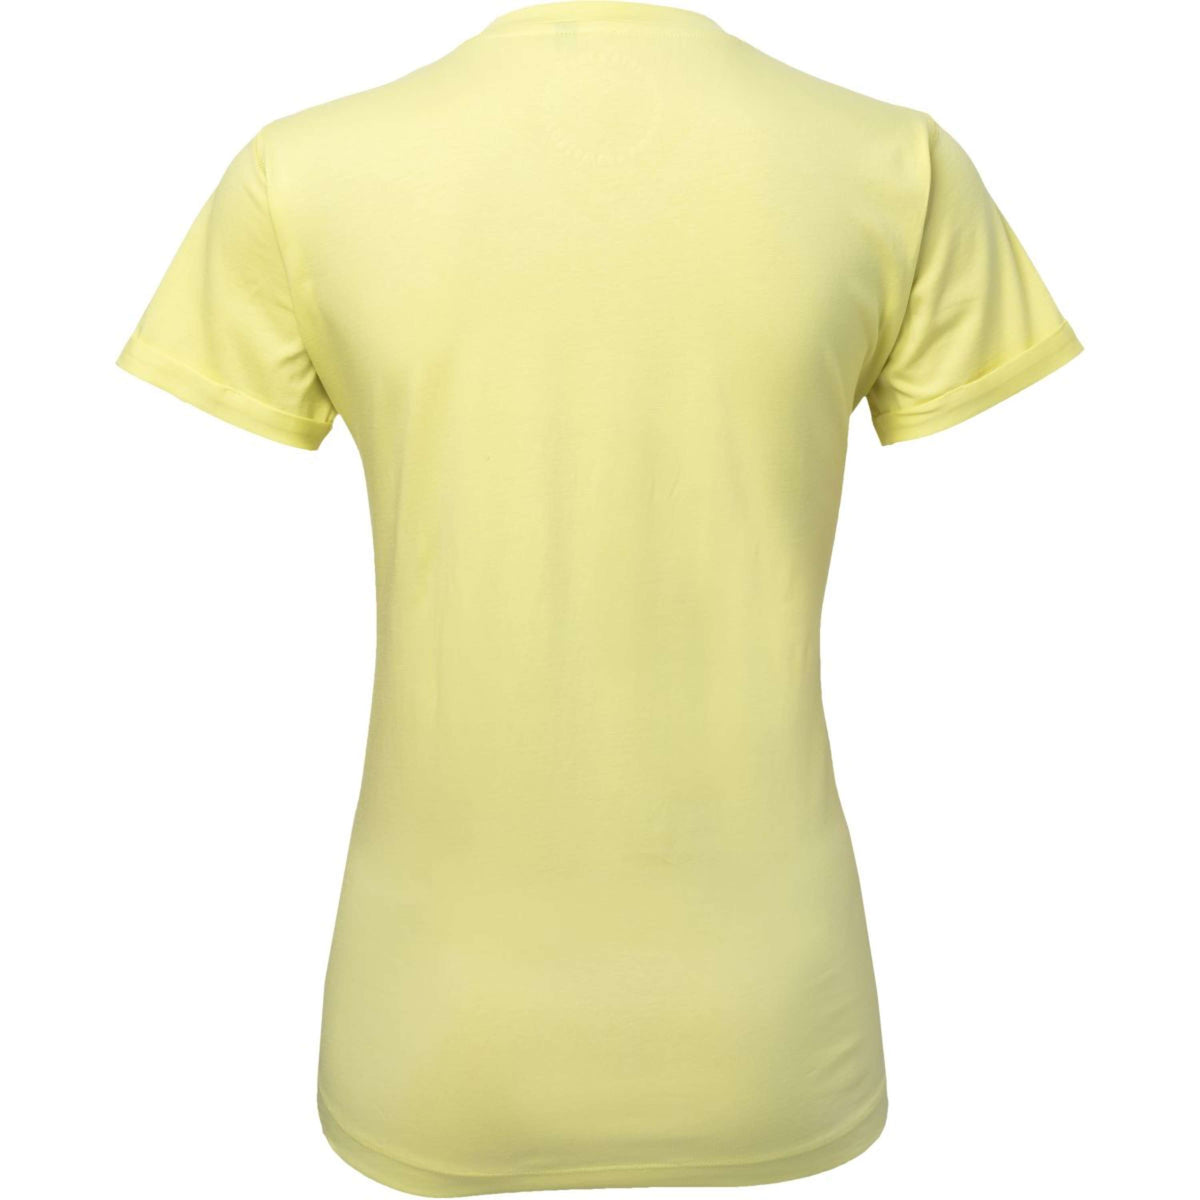 PK Shirt Picasso Cotton Sunny Yellow